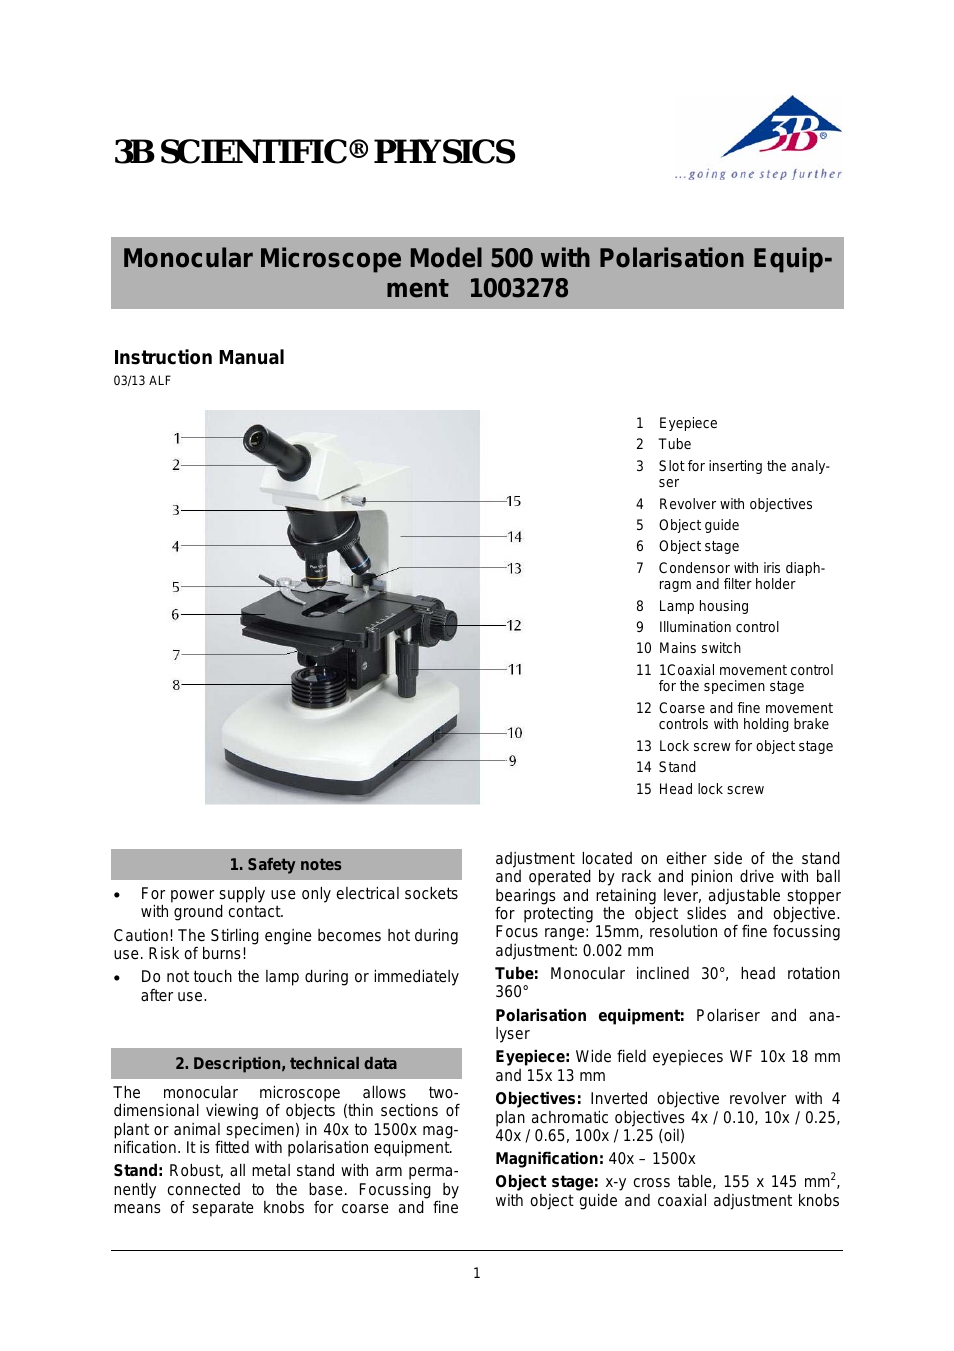 Monocular Microscope Model 500 with Polarization Equipment